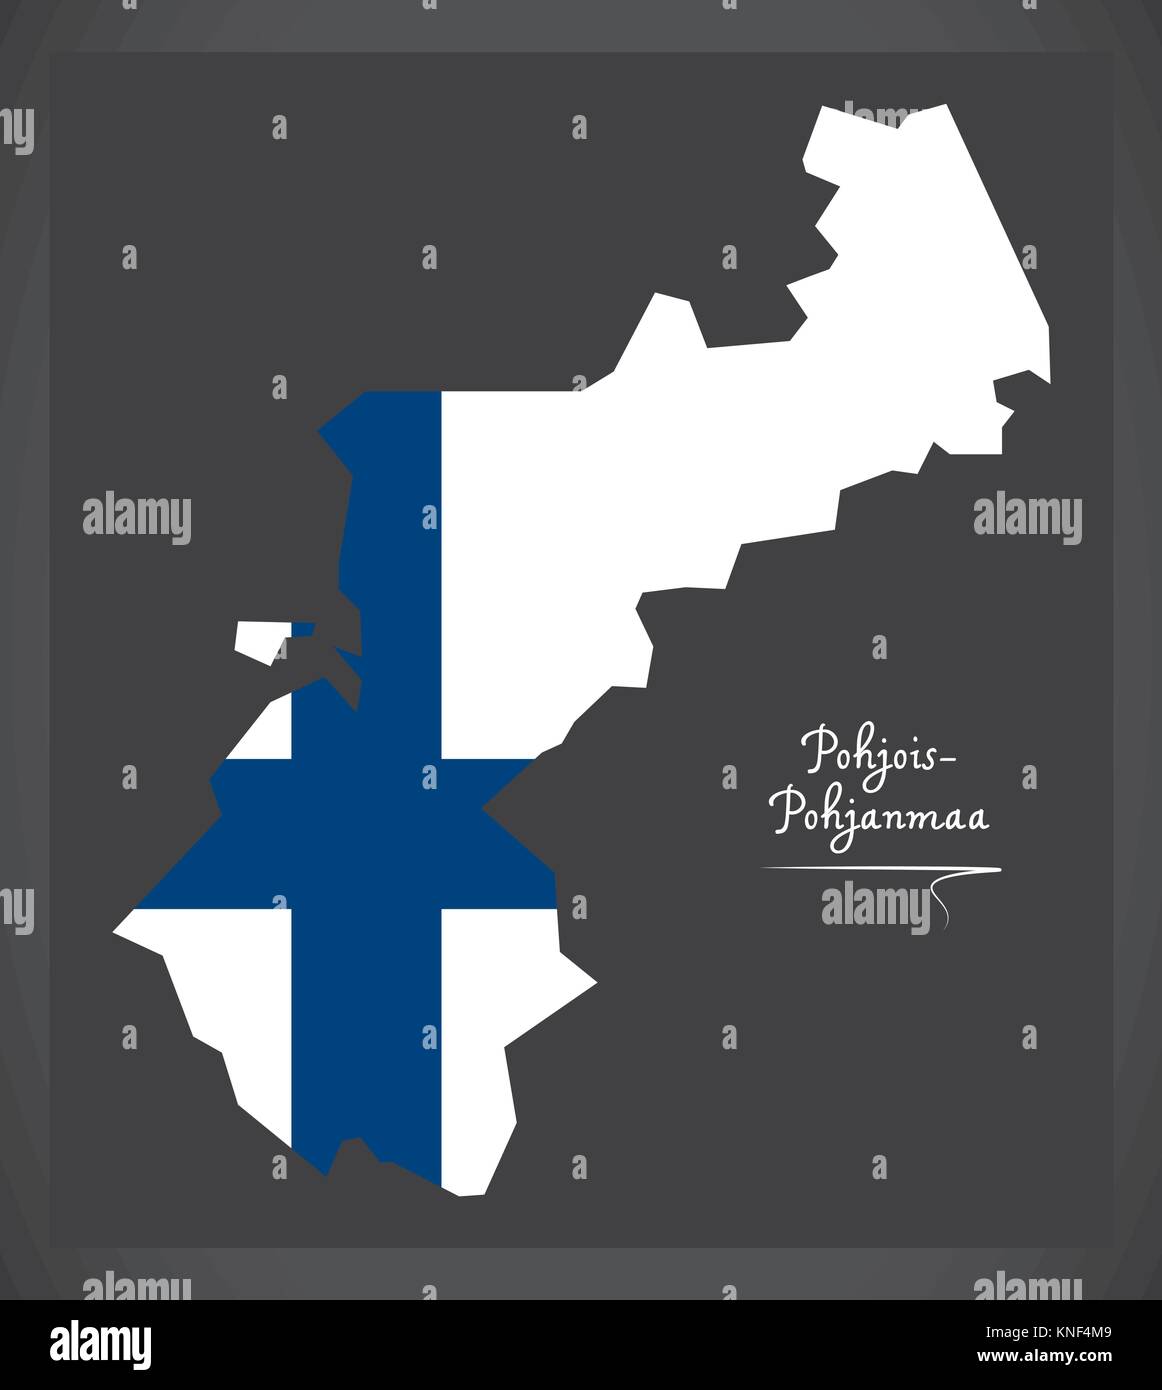 Pohjois-Pohjanmaa map of Finland with Finnish national flag illustration Stock Vector